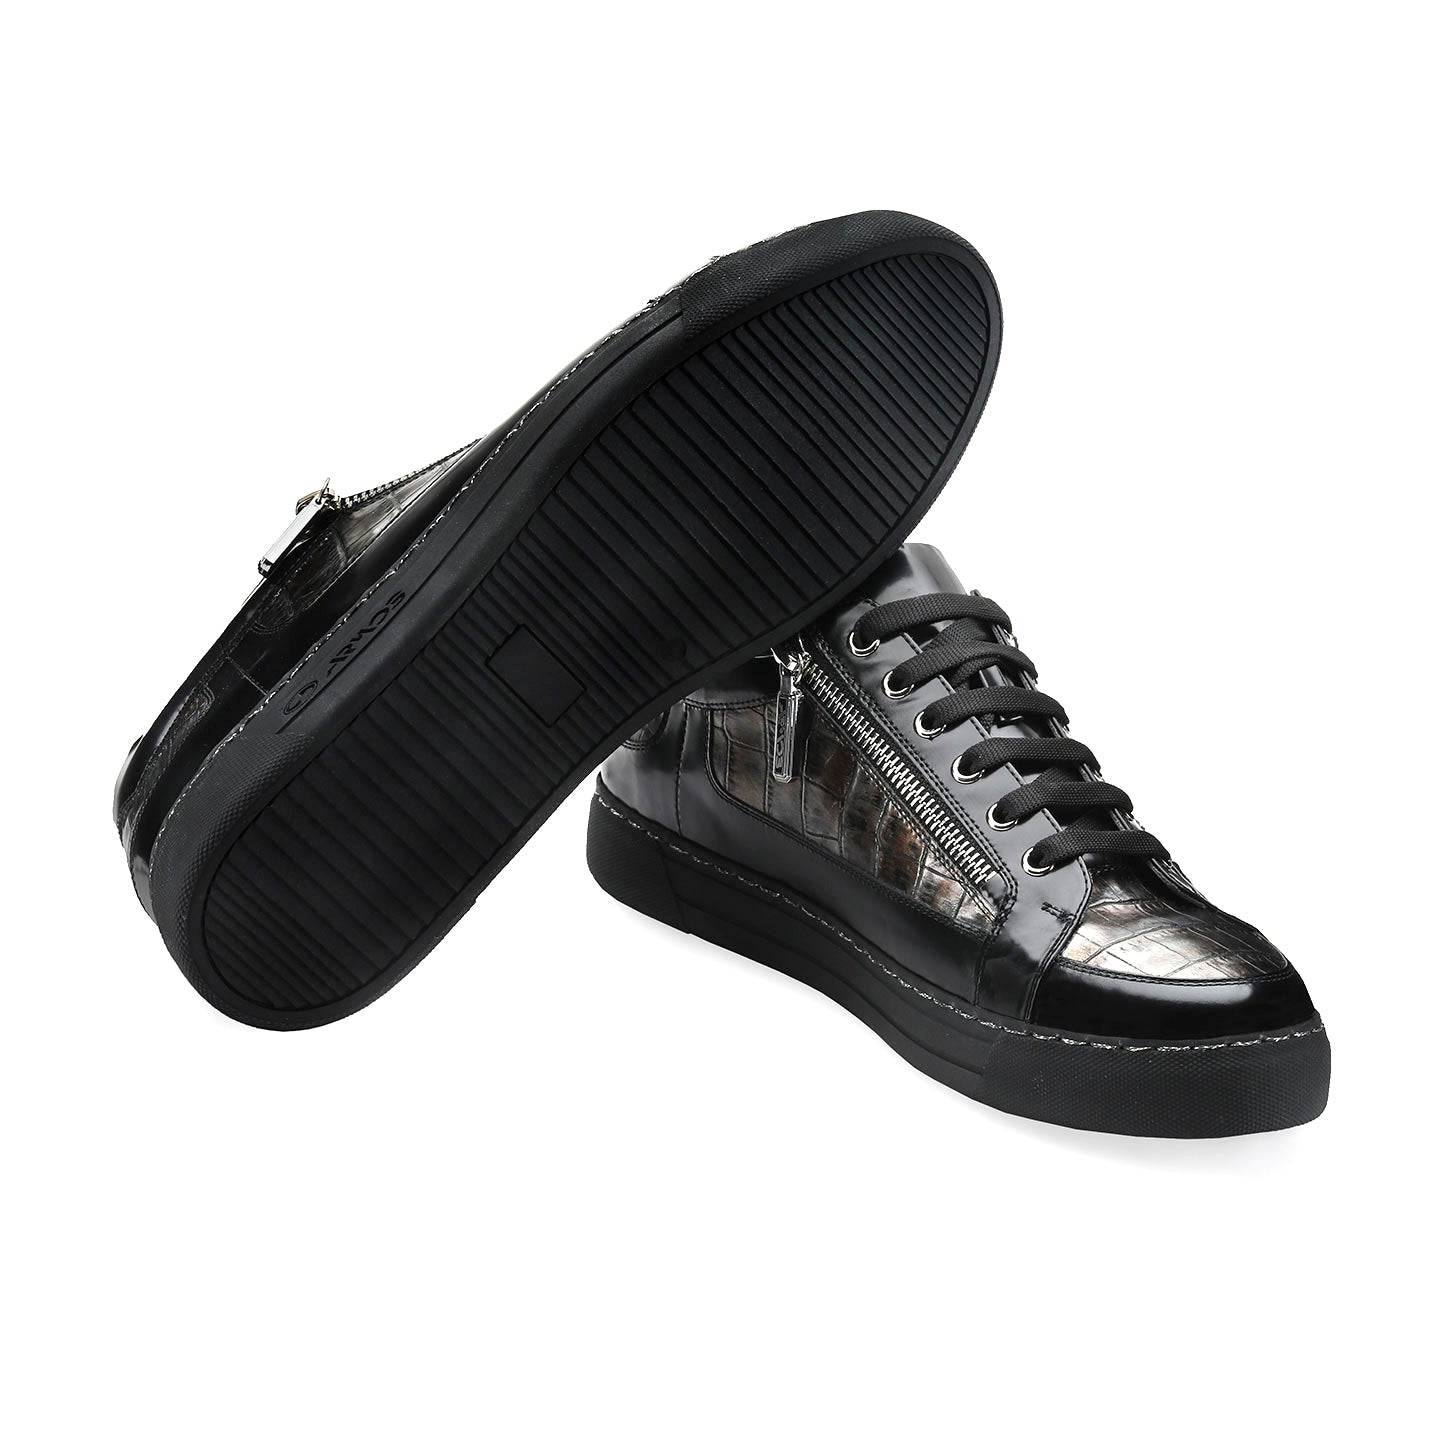 Black zipped sneakers